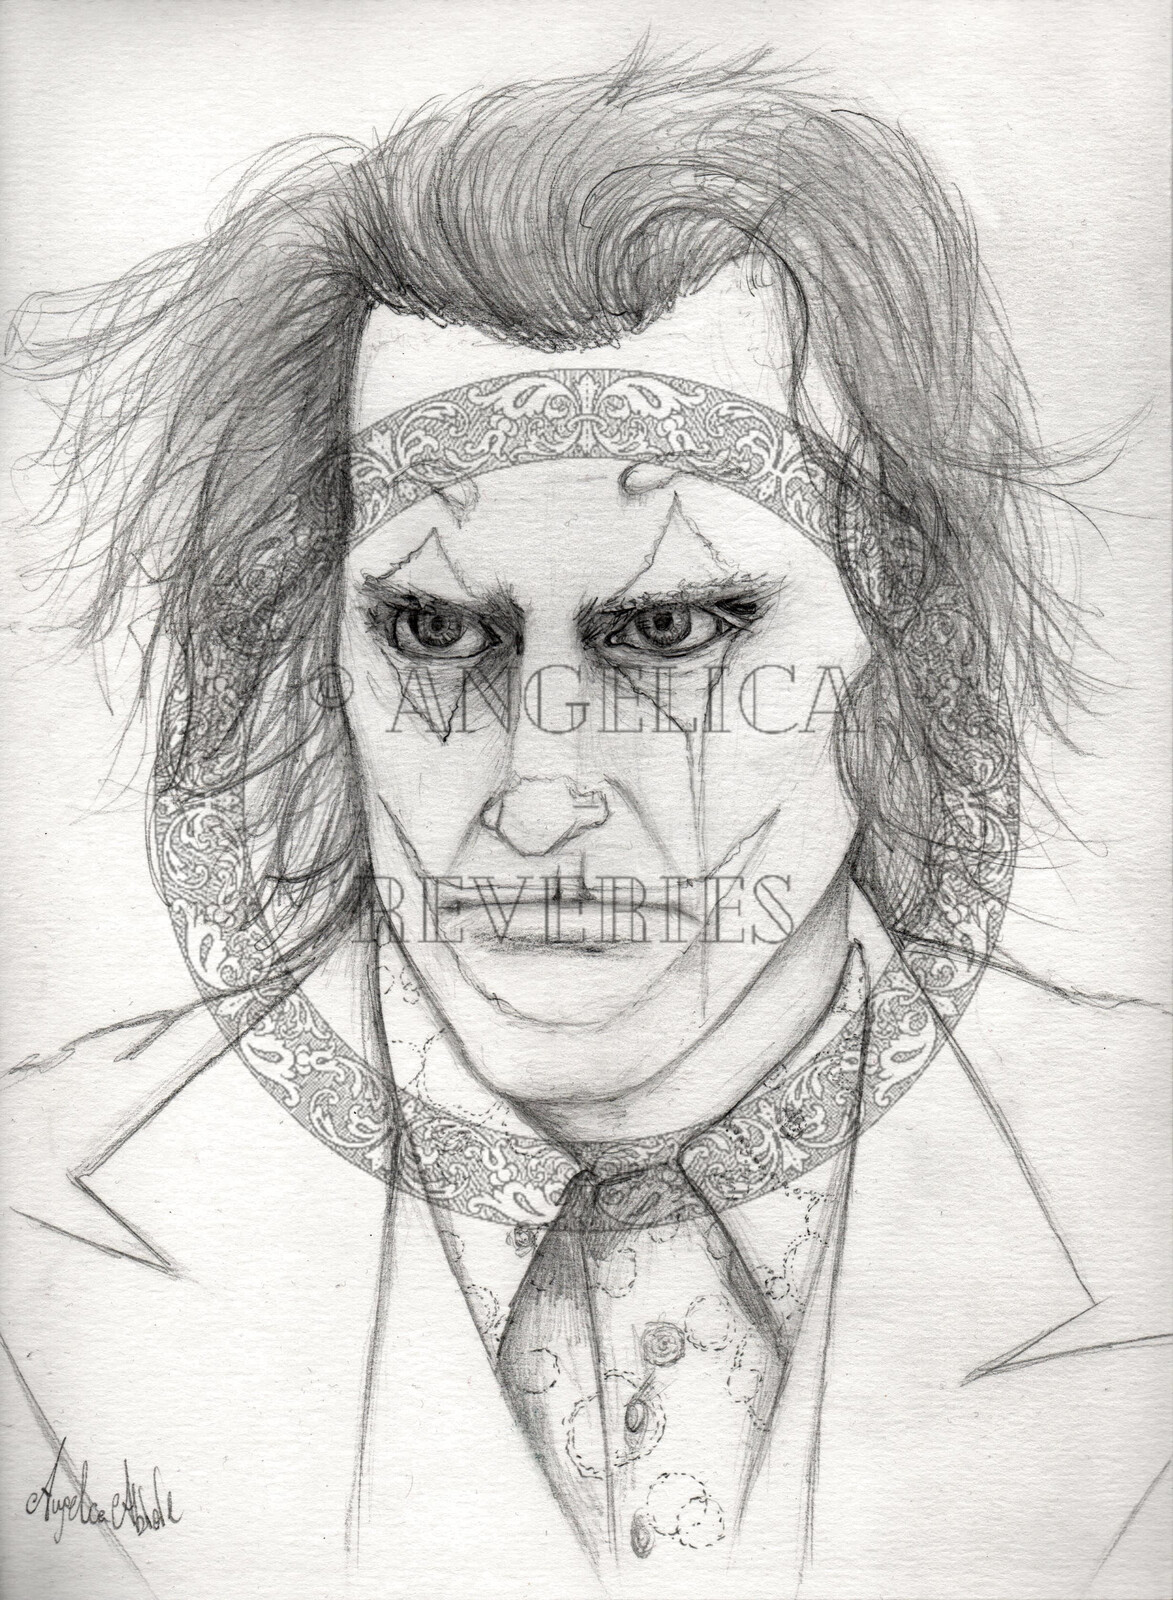 "The Joker"
Portrait of J. Phoenix's version
Pencil on paper